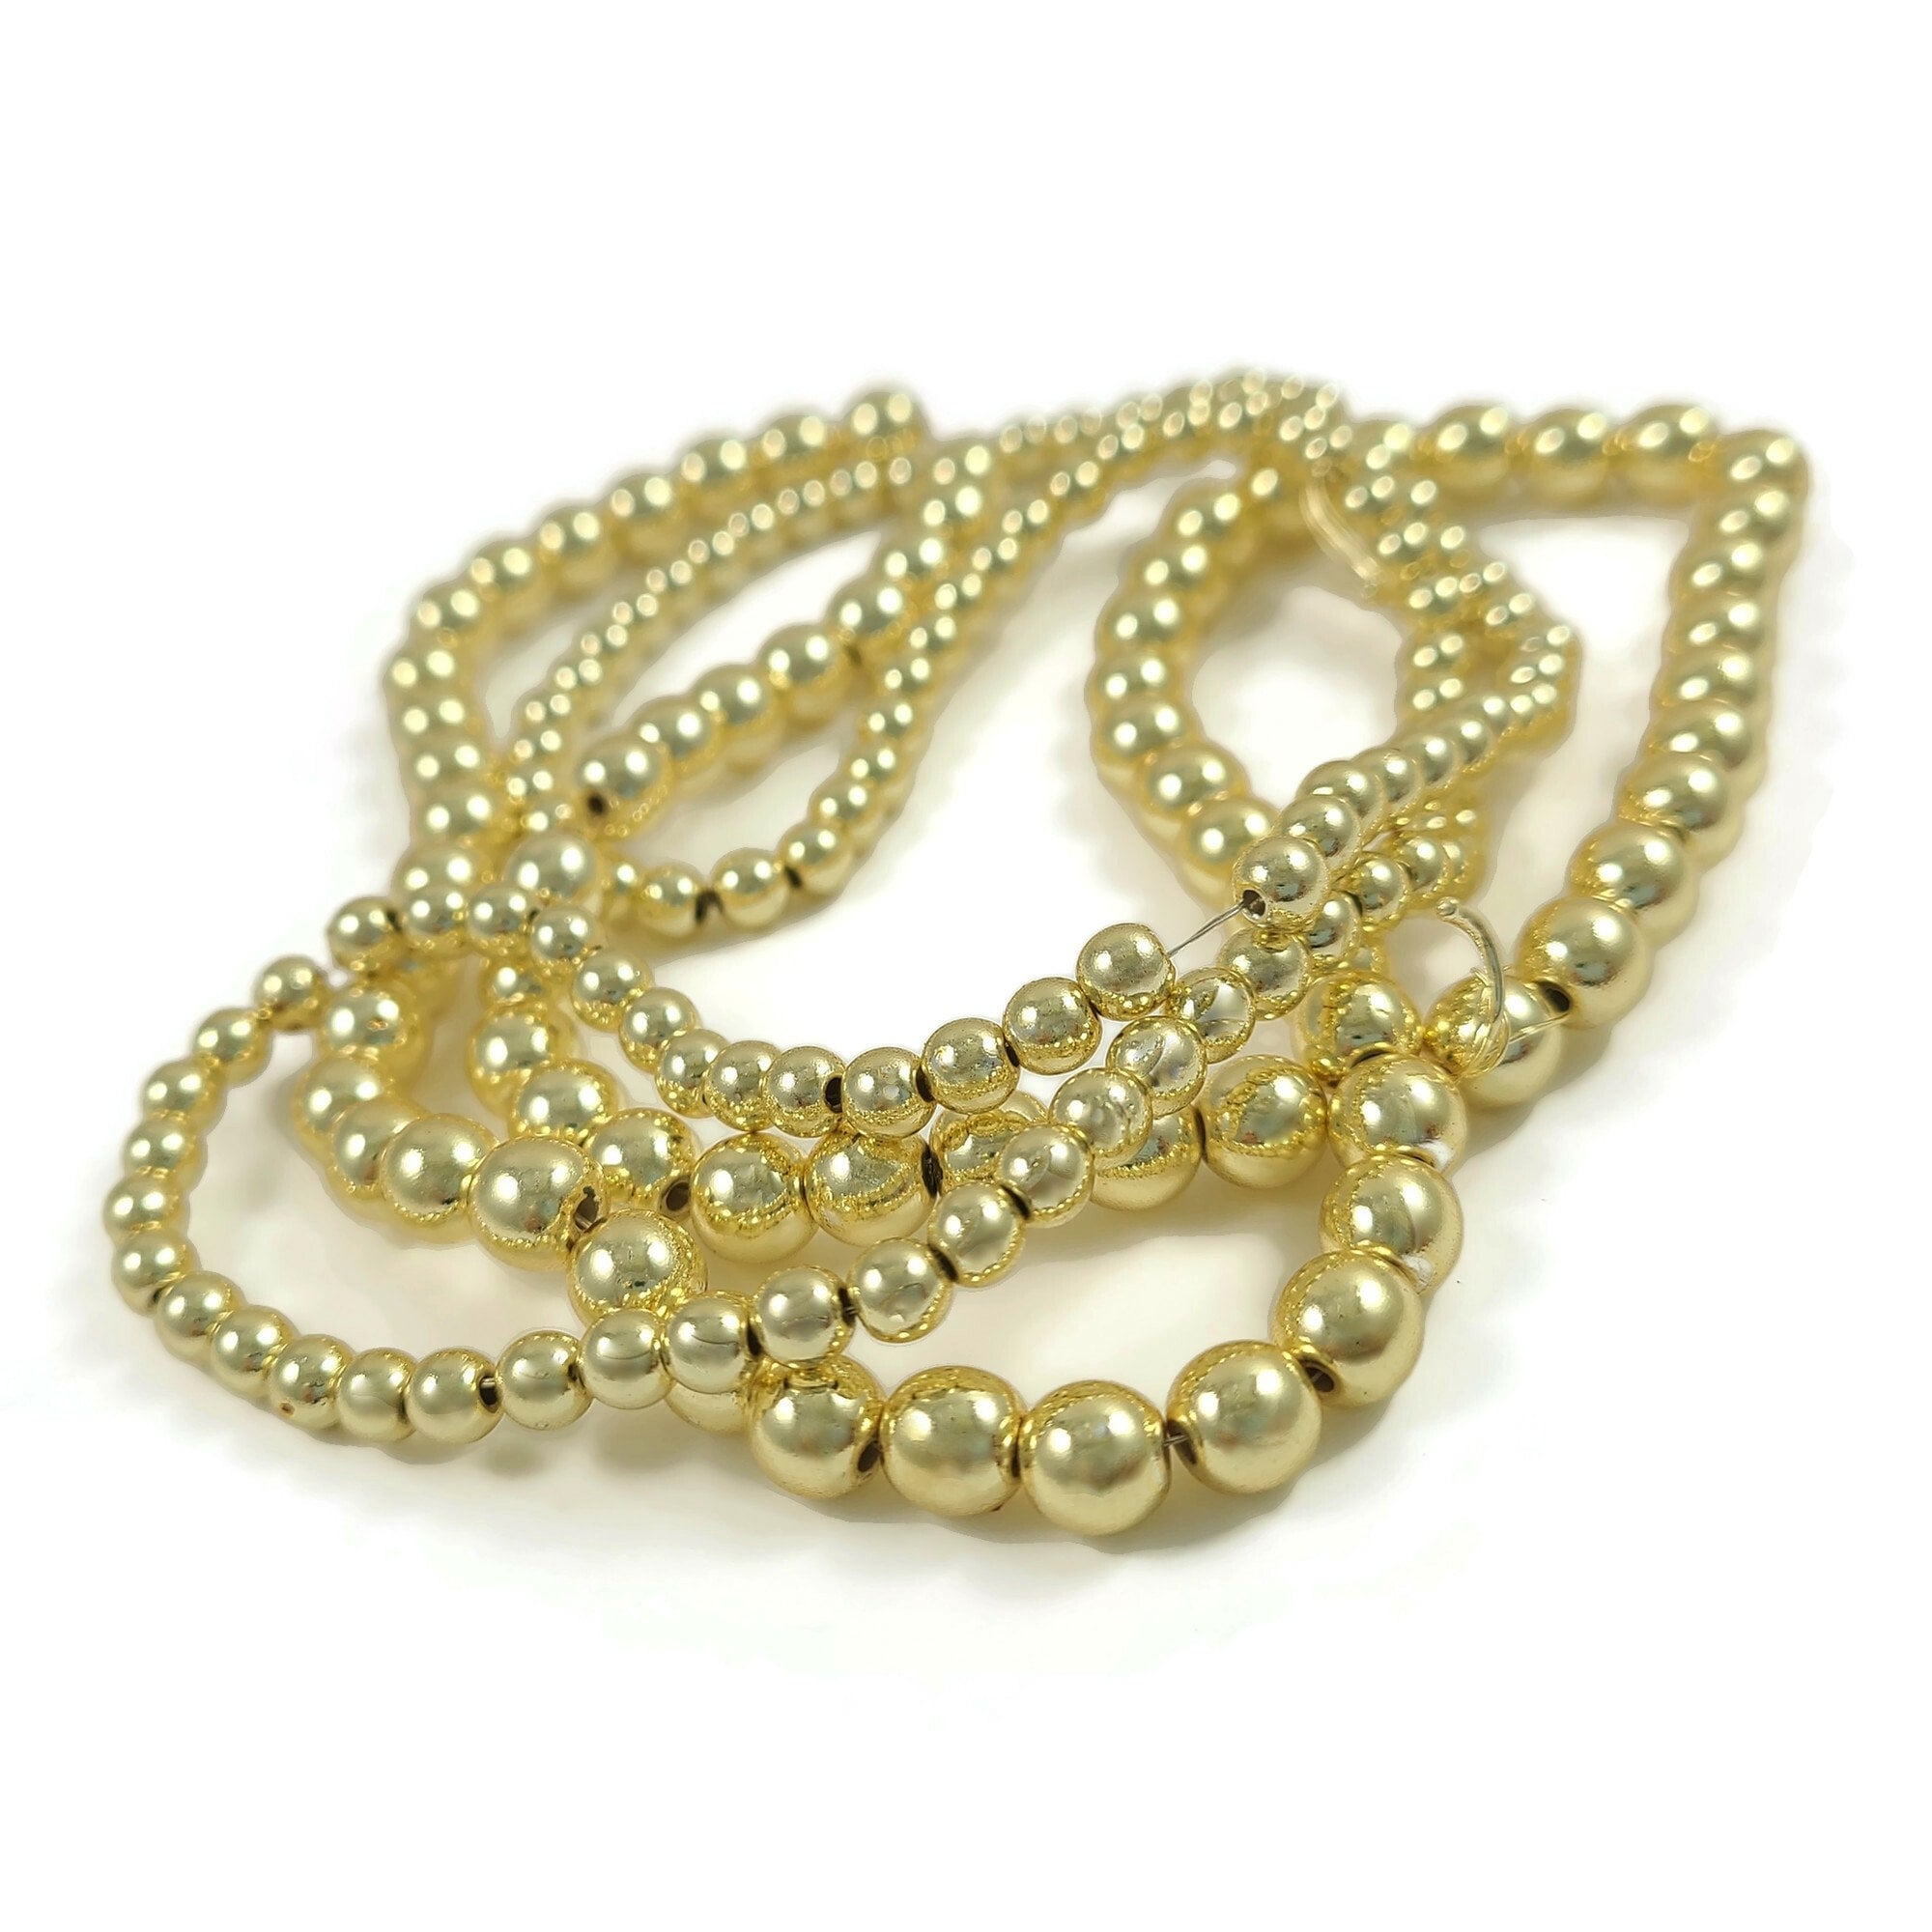 Gold hematite beads, 3mm, 4mm, 6mm, 8mm, Round gemstone spacer beads, Jewelry making supplies